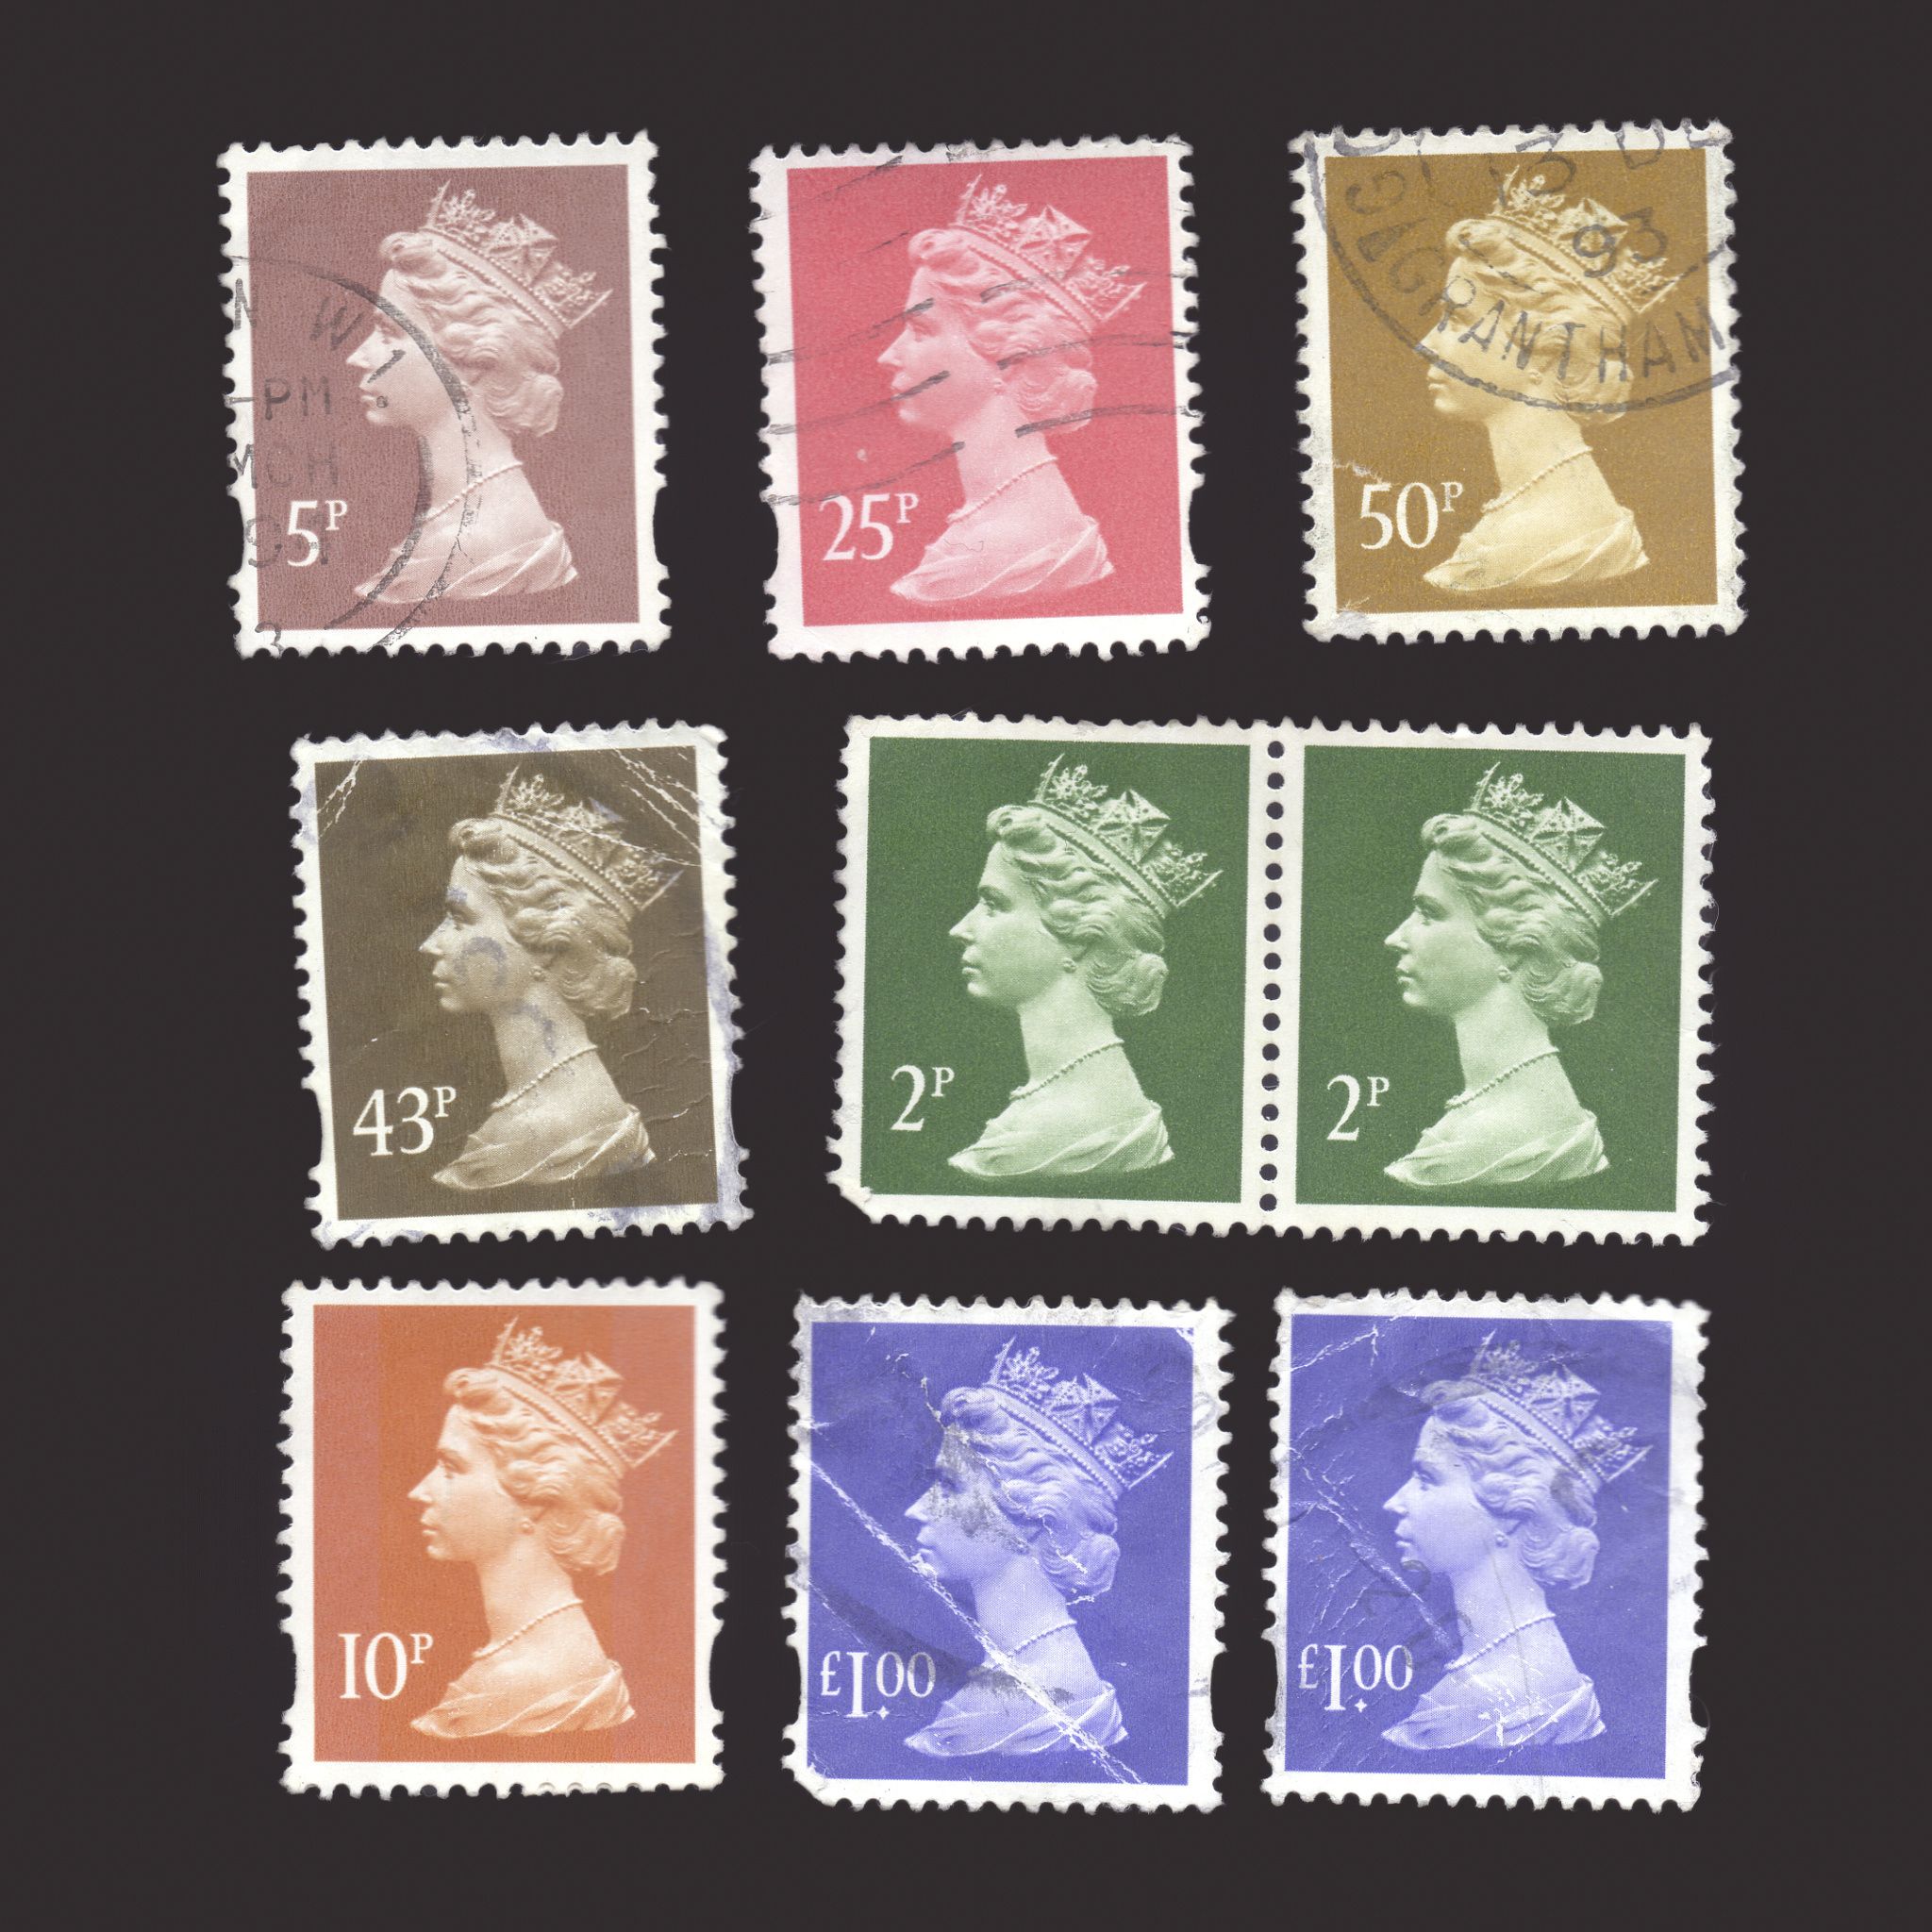 British stamps - Britain UK Selection of various used British Royal ...